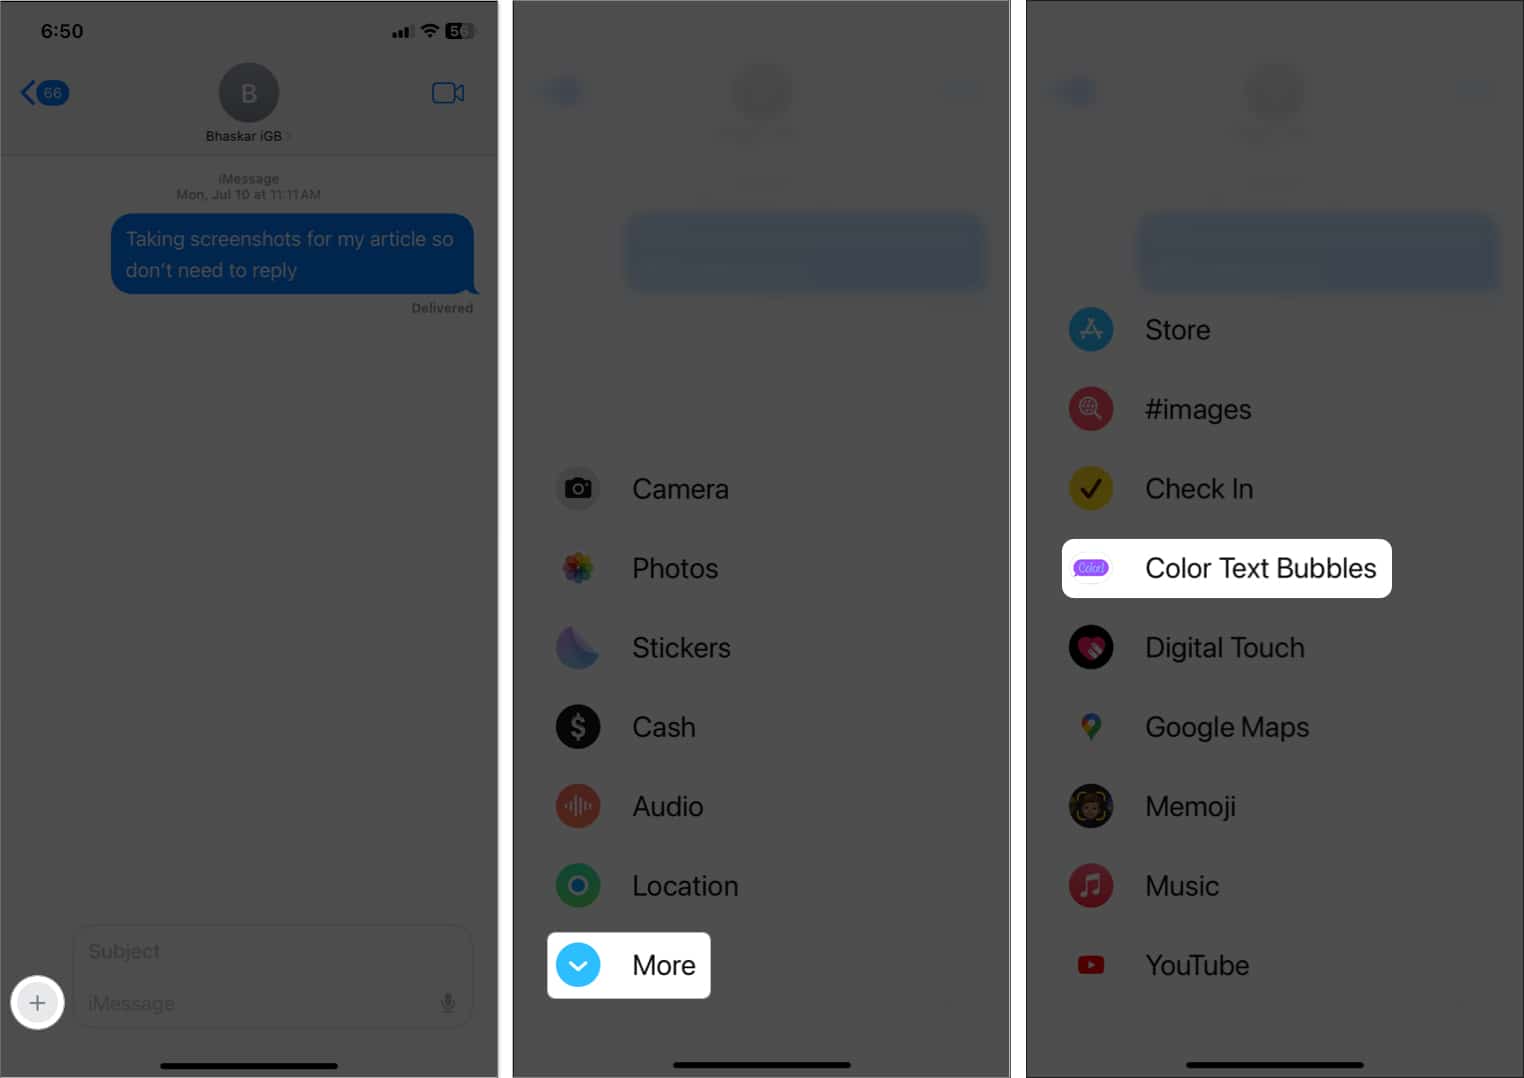 tap plus sign, select more, color text bubbles in messages